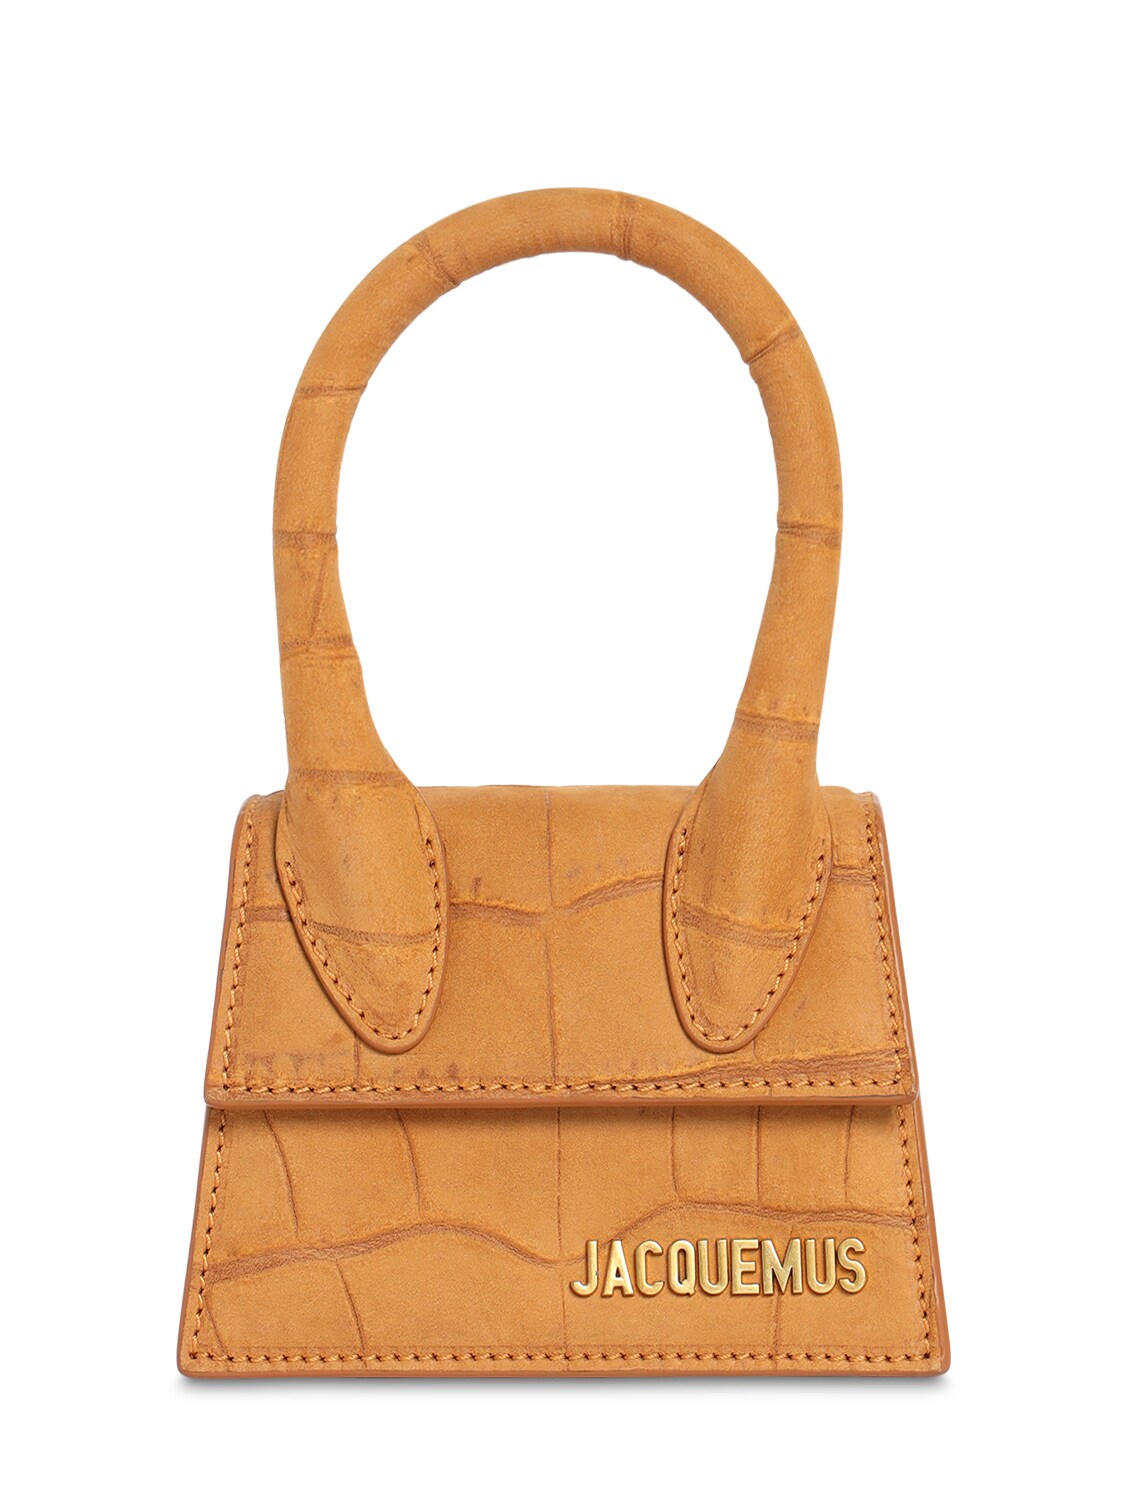 Jacquemus Le Chiquito Croc Embossed Leather Bag In Honey